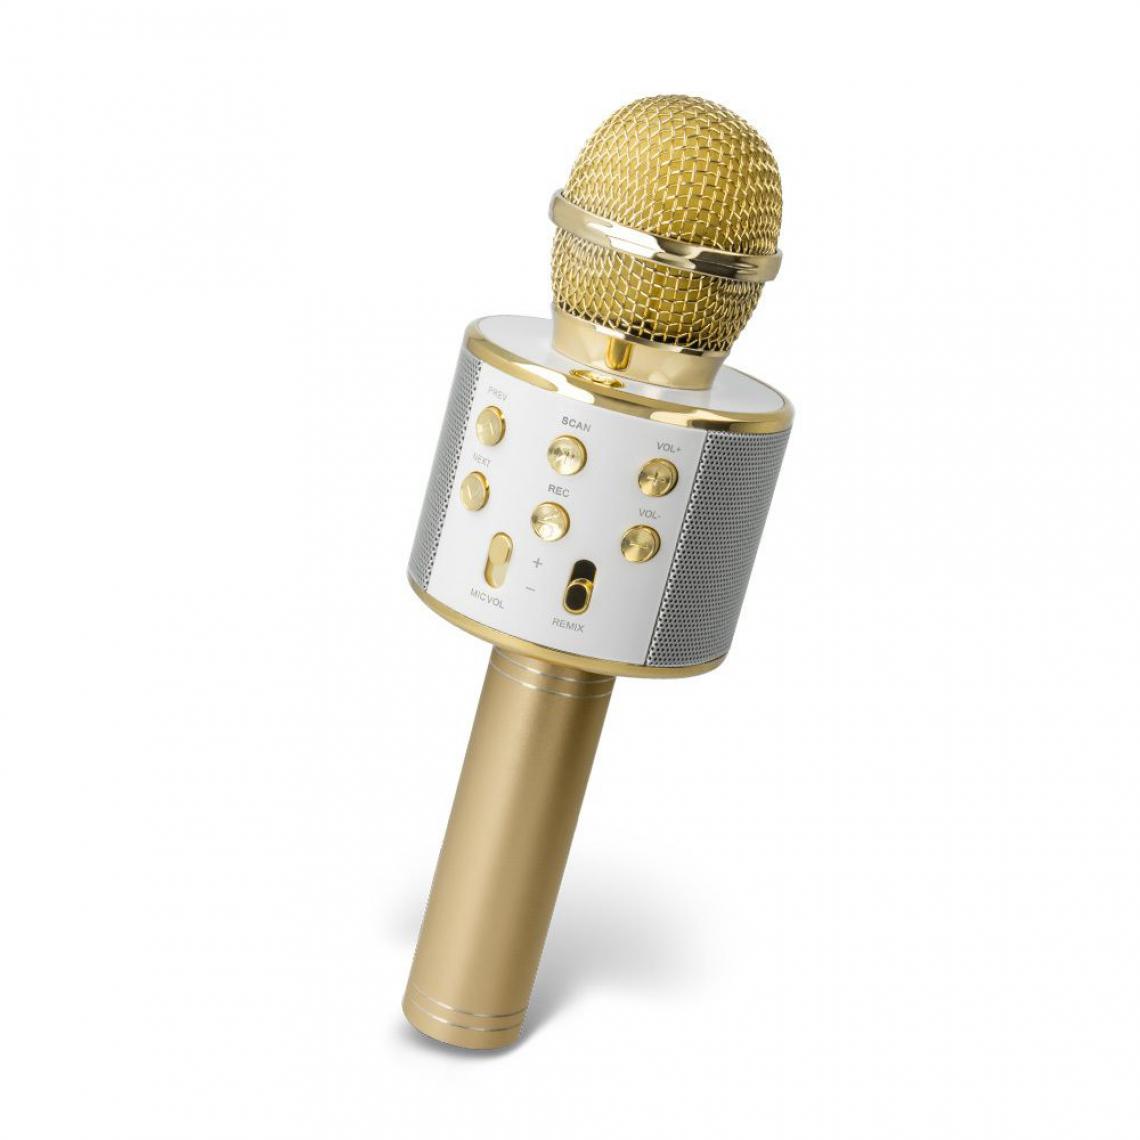 Ozzzo - Microphone Karaoke bluetooth haut parleur ozzzo Gold Or pour WIKO Wiew 2 - Autres accessoires smartphone